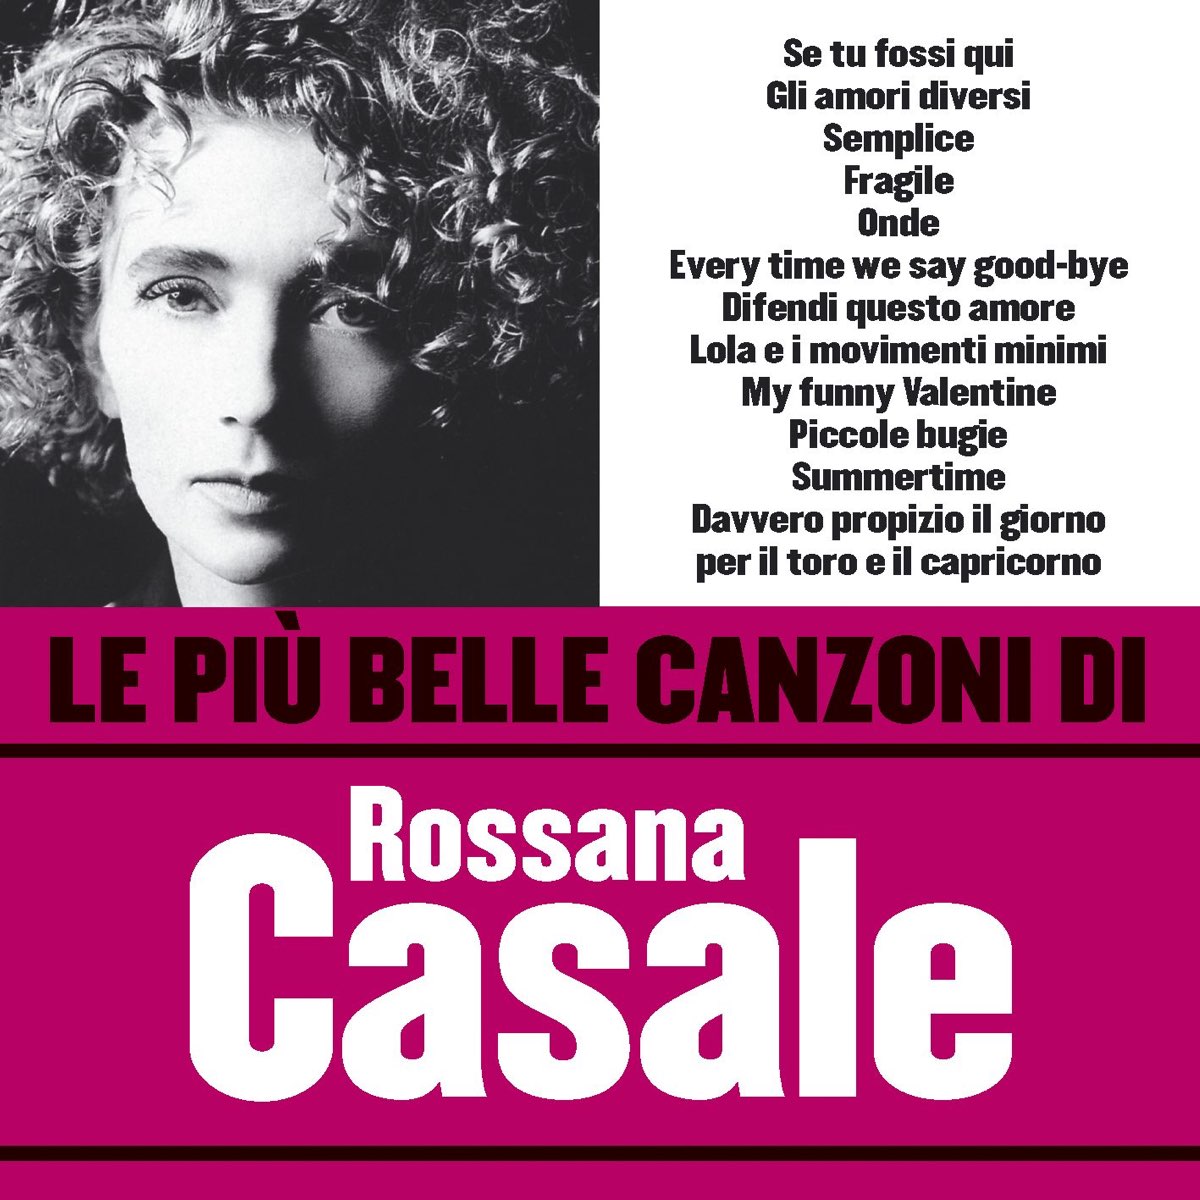 Le più belle canzoni di Rossana Casale by Rossana Casale on Apple Music